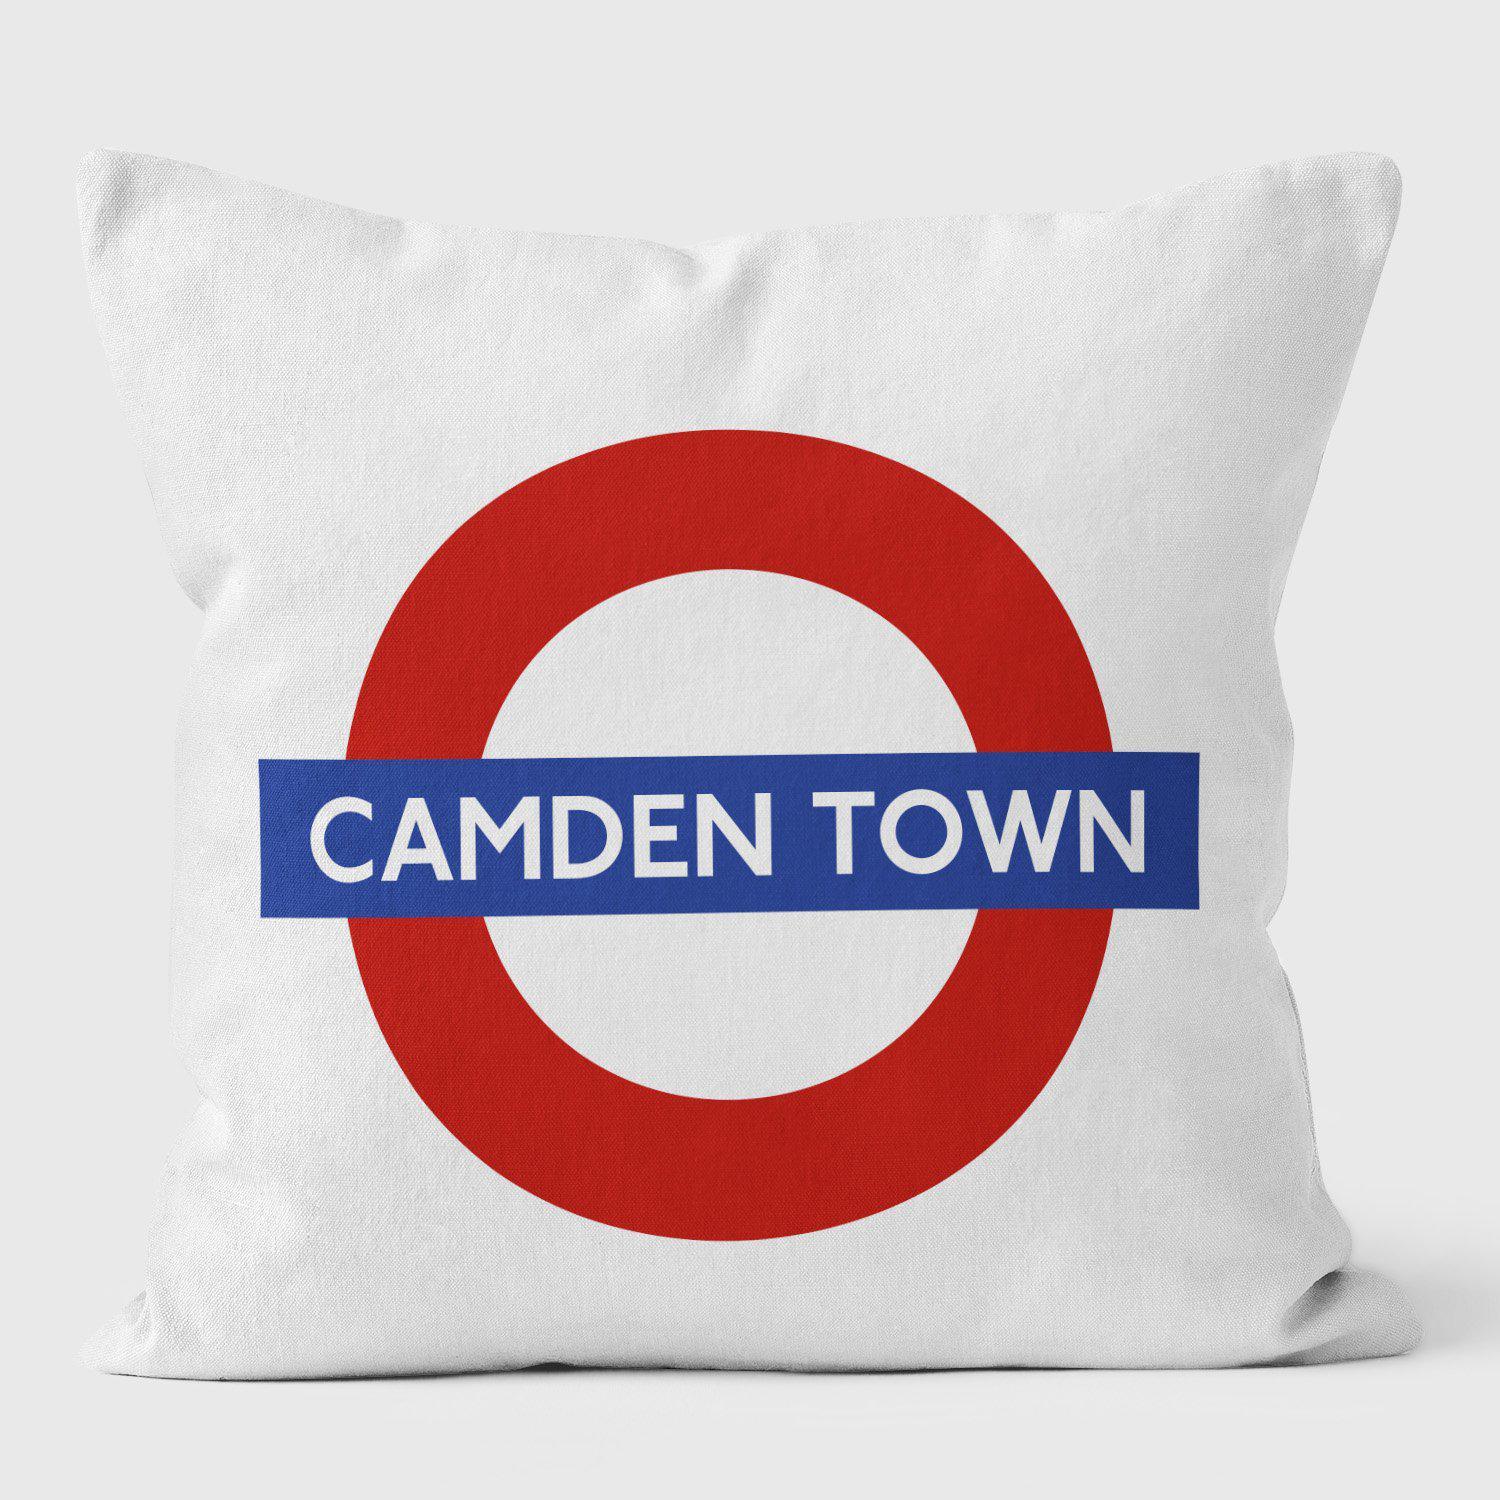 Camden Town London Underground Tube Station Roundel Cushion - Handmade Cushions UK - WeLoveCushions